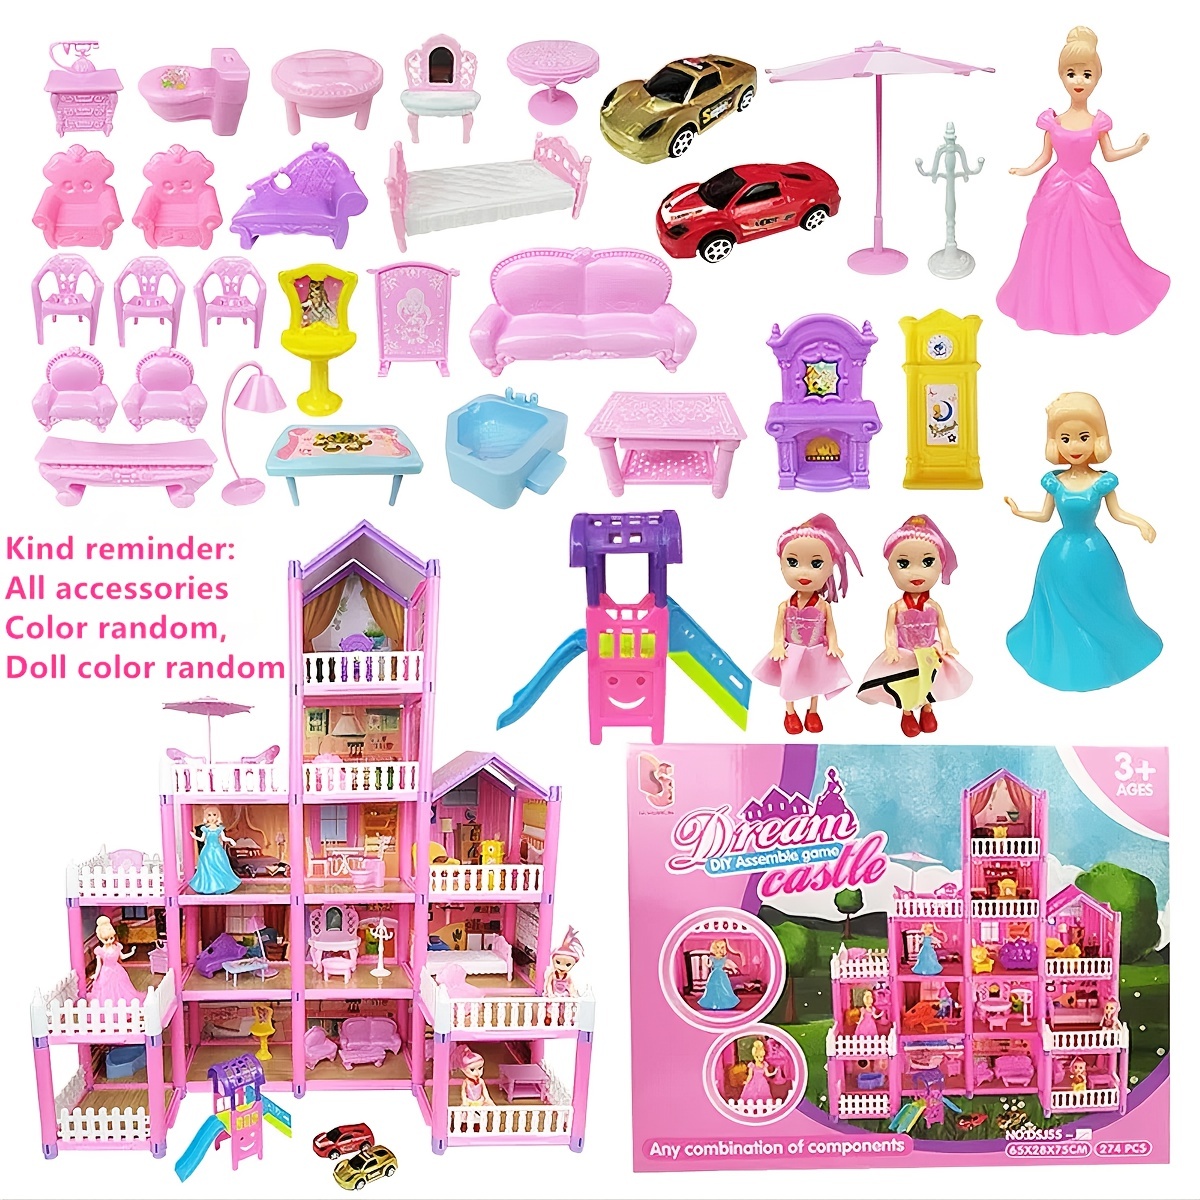 New Big Size Girls Princess Villa Toy Handmade Doll House Castle DIY House  Toy Dollhouse Birthday